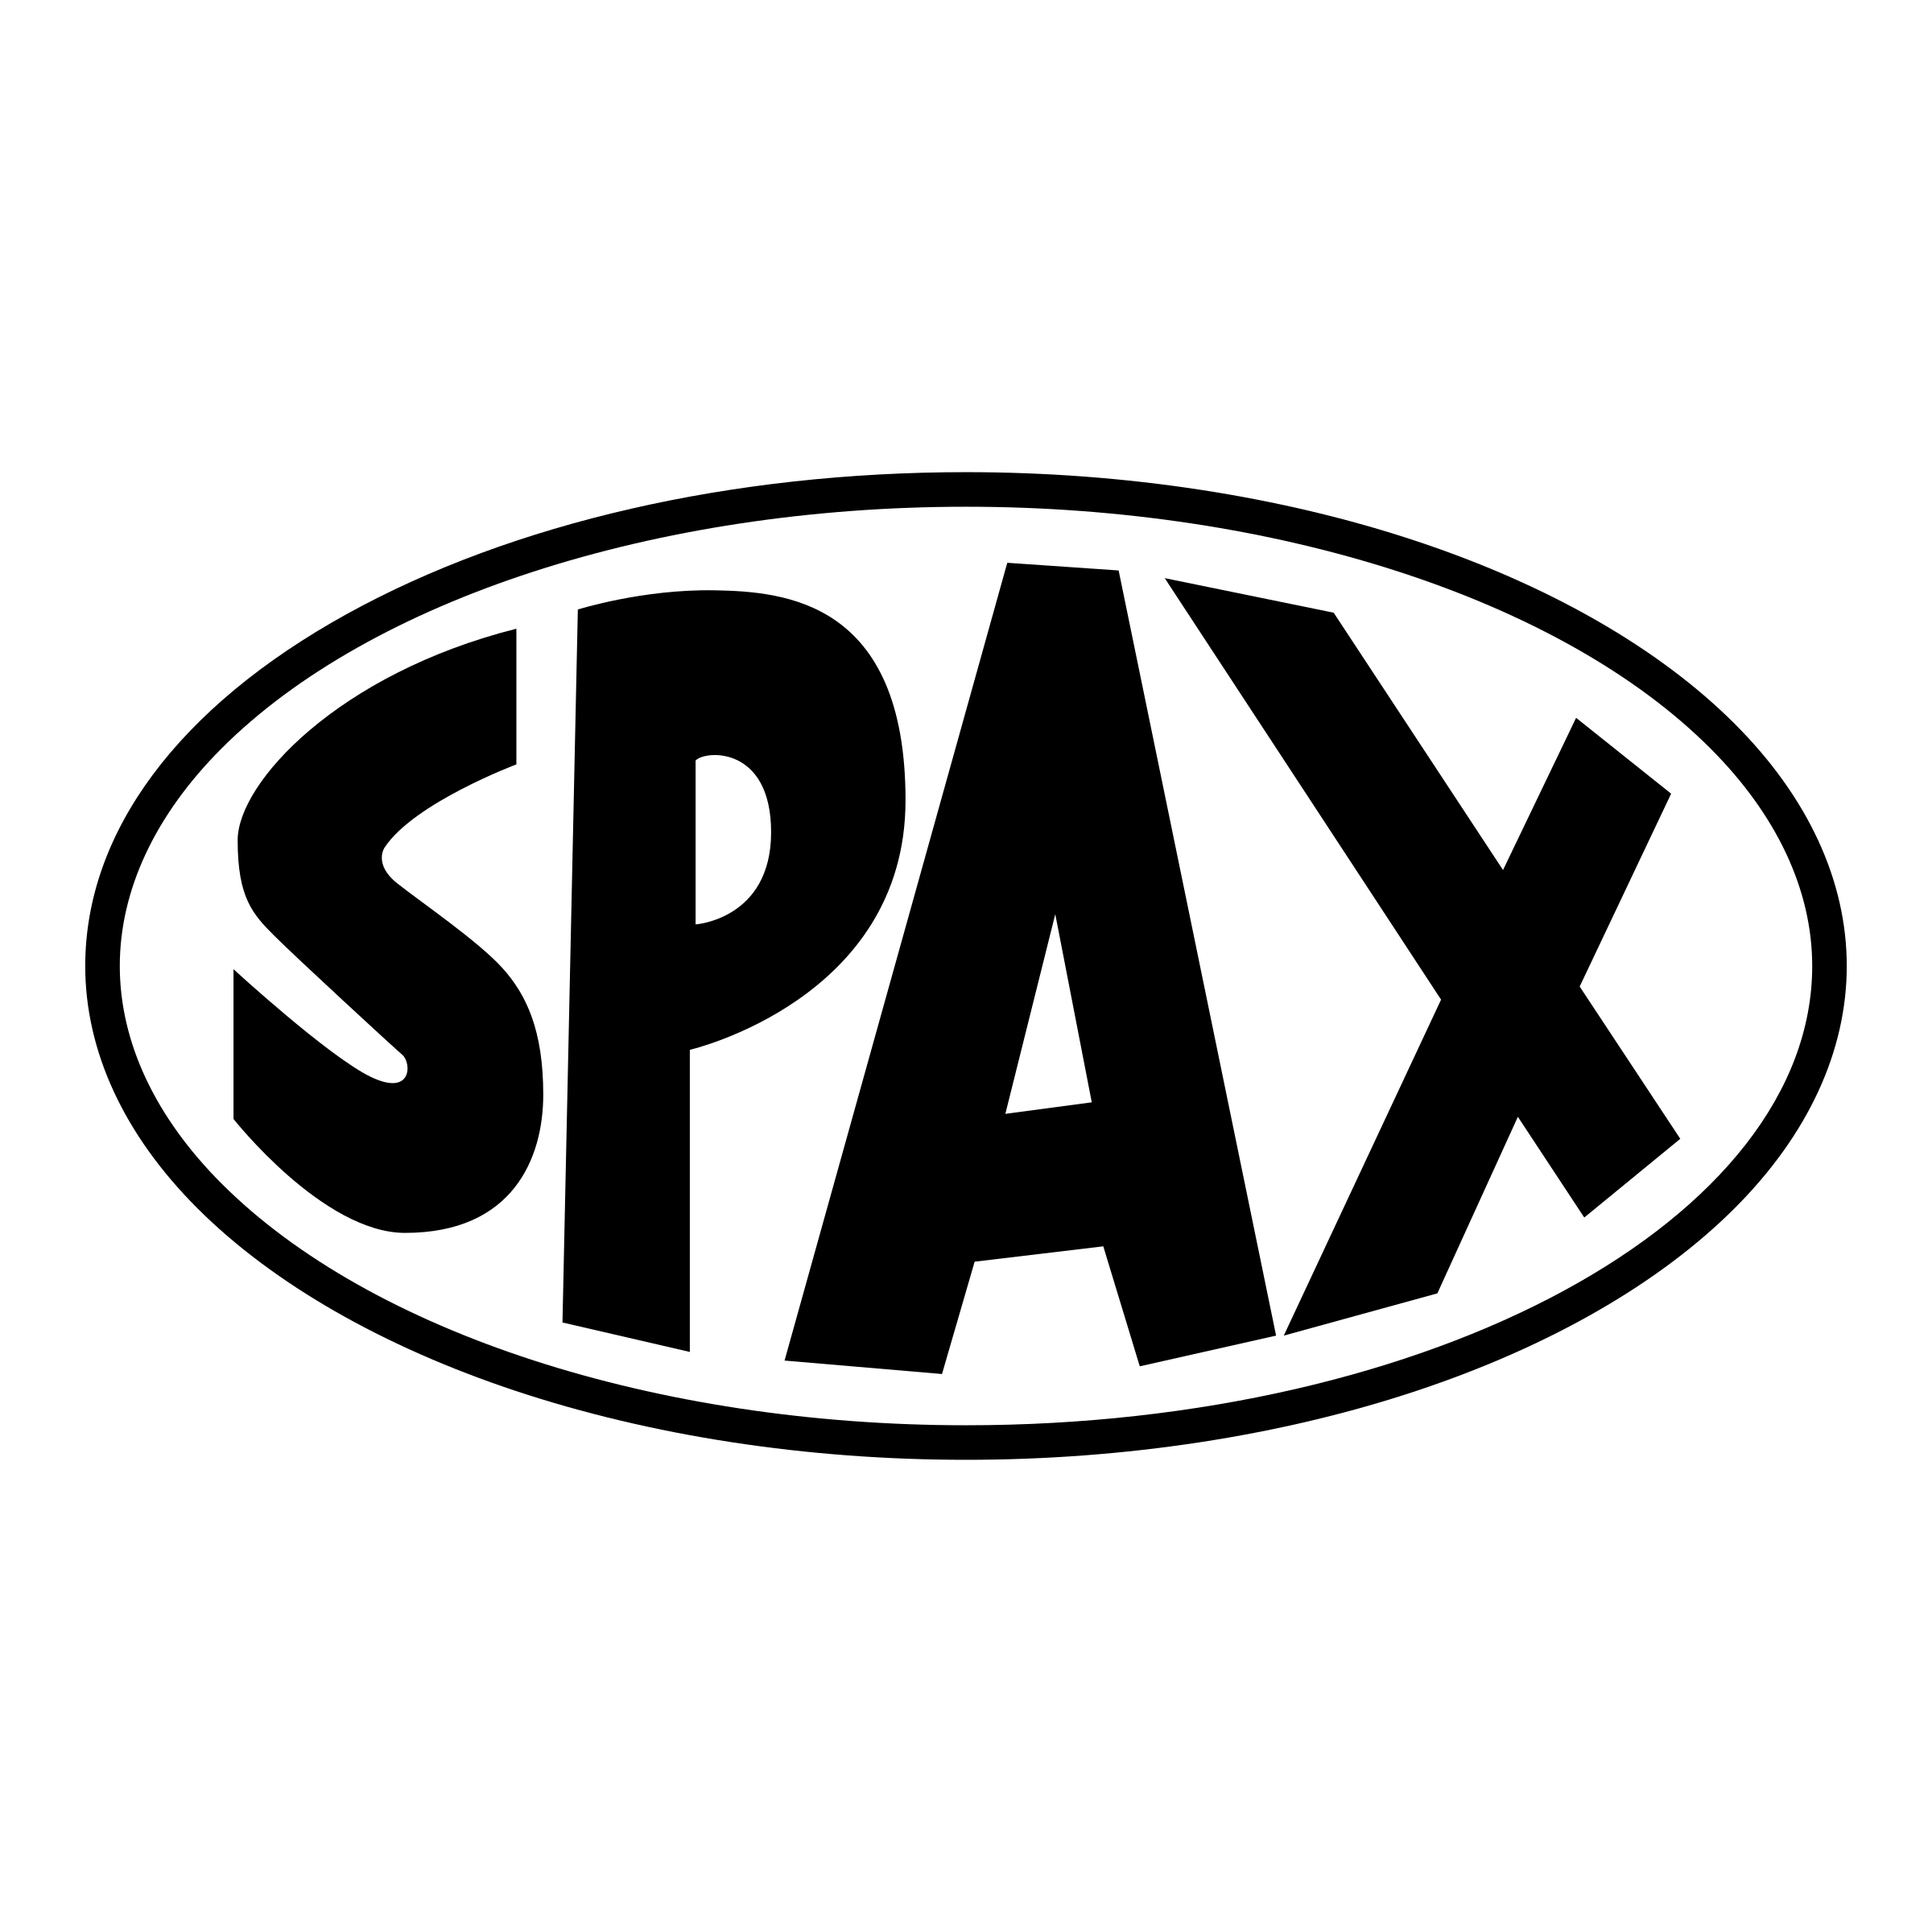 spax-black logo-png-transparent